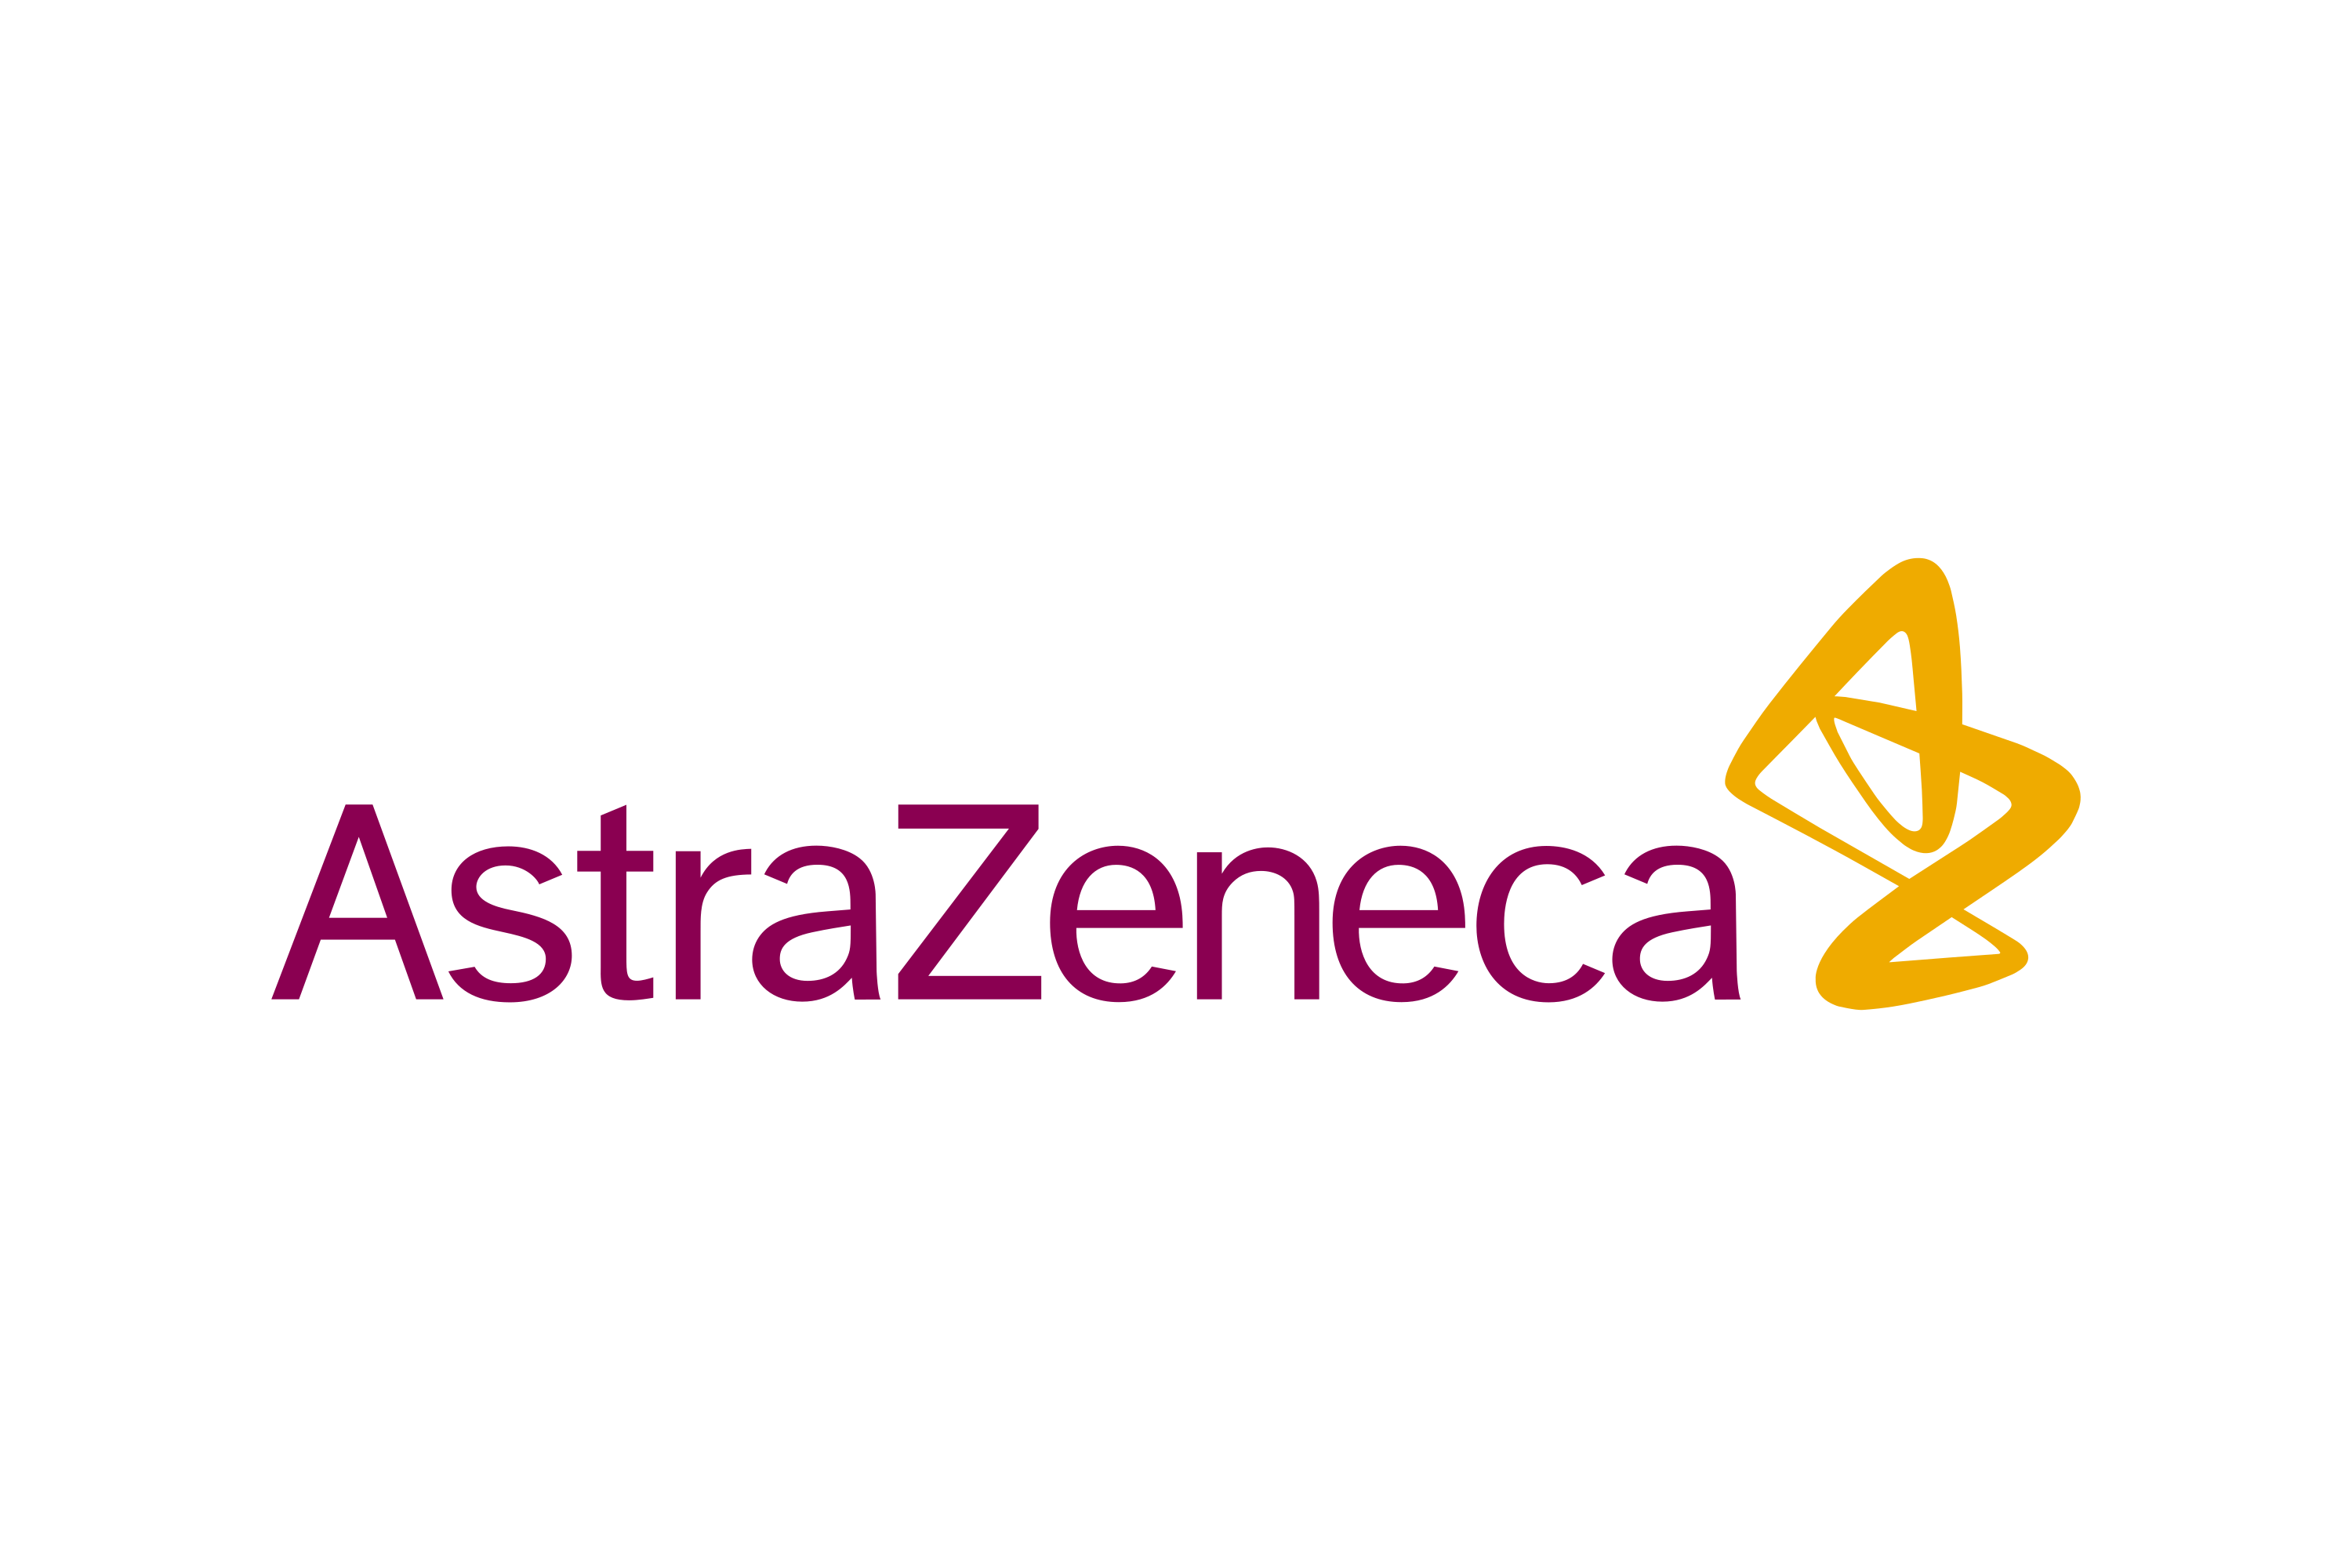 Download AstraZeneca Logo in SVG Vector or PNG File Format - Logo.wine